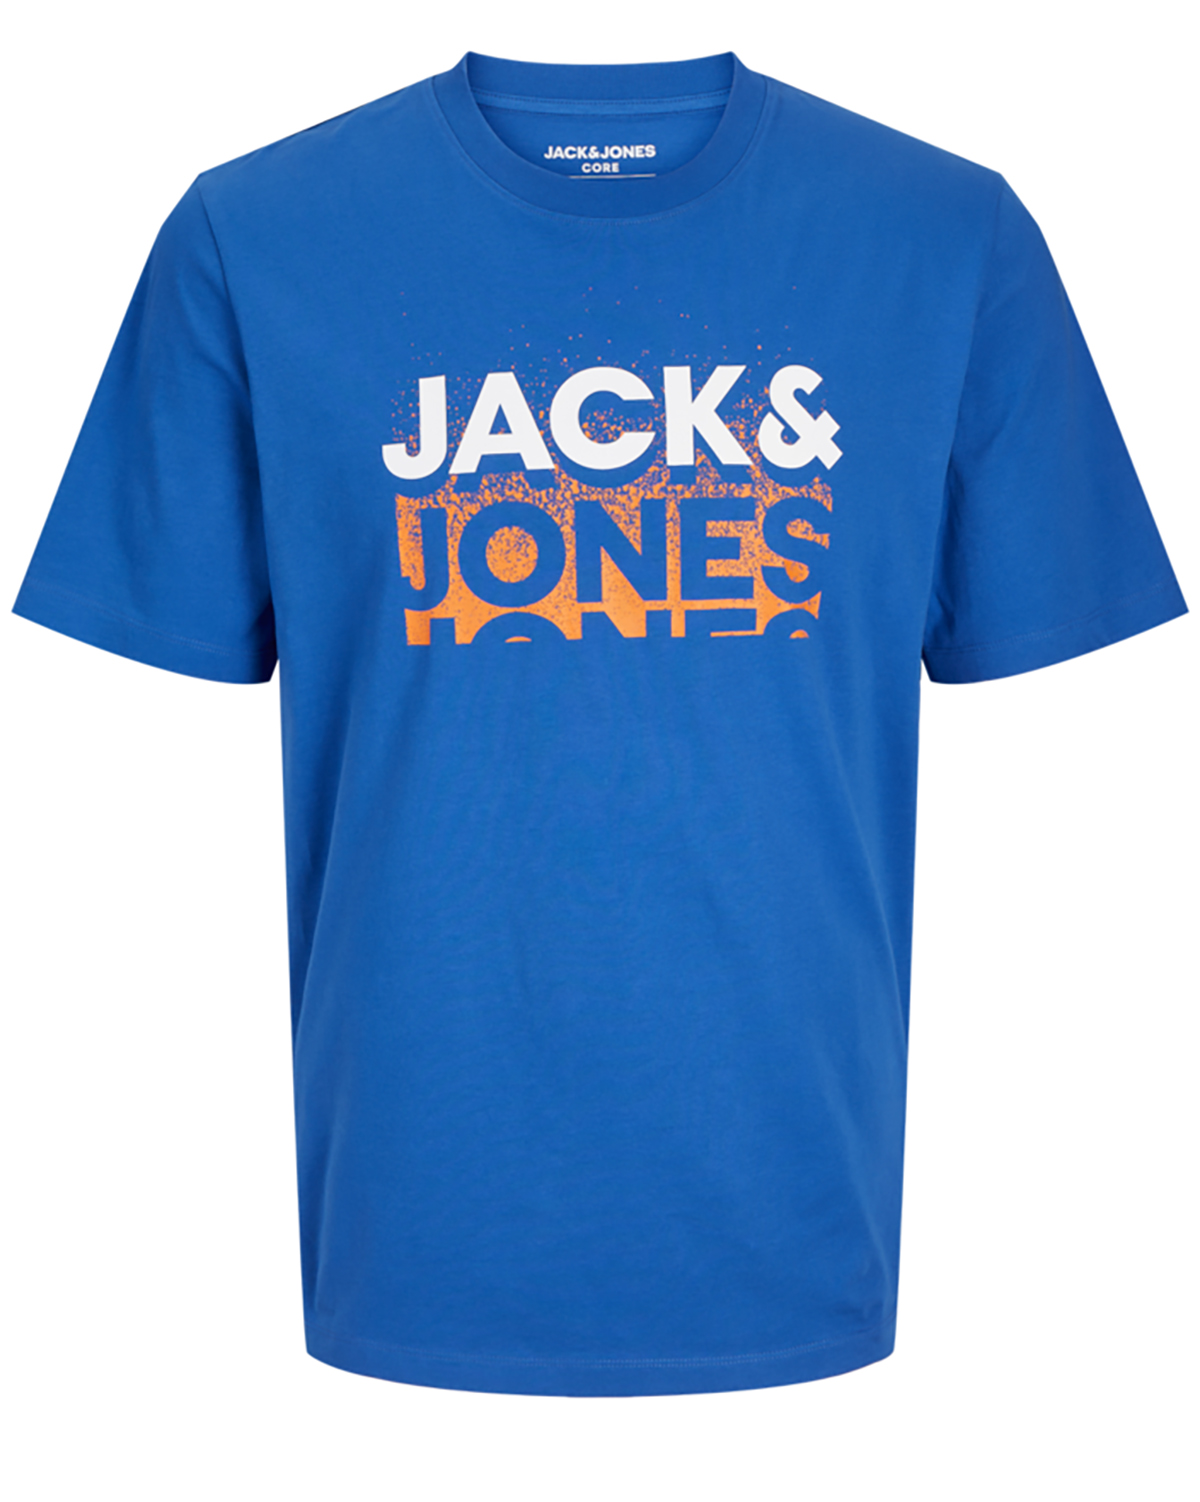 Se Jack & Jones t-shirt s/s, Gradient tee, blå - 188 - L+ - L hos Umame.dk